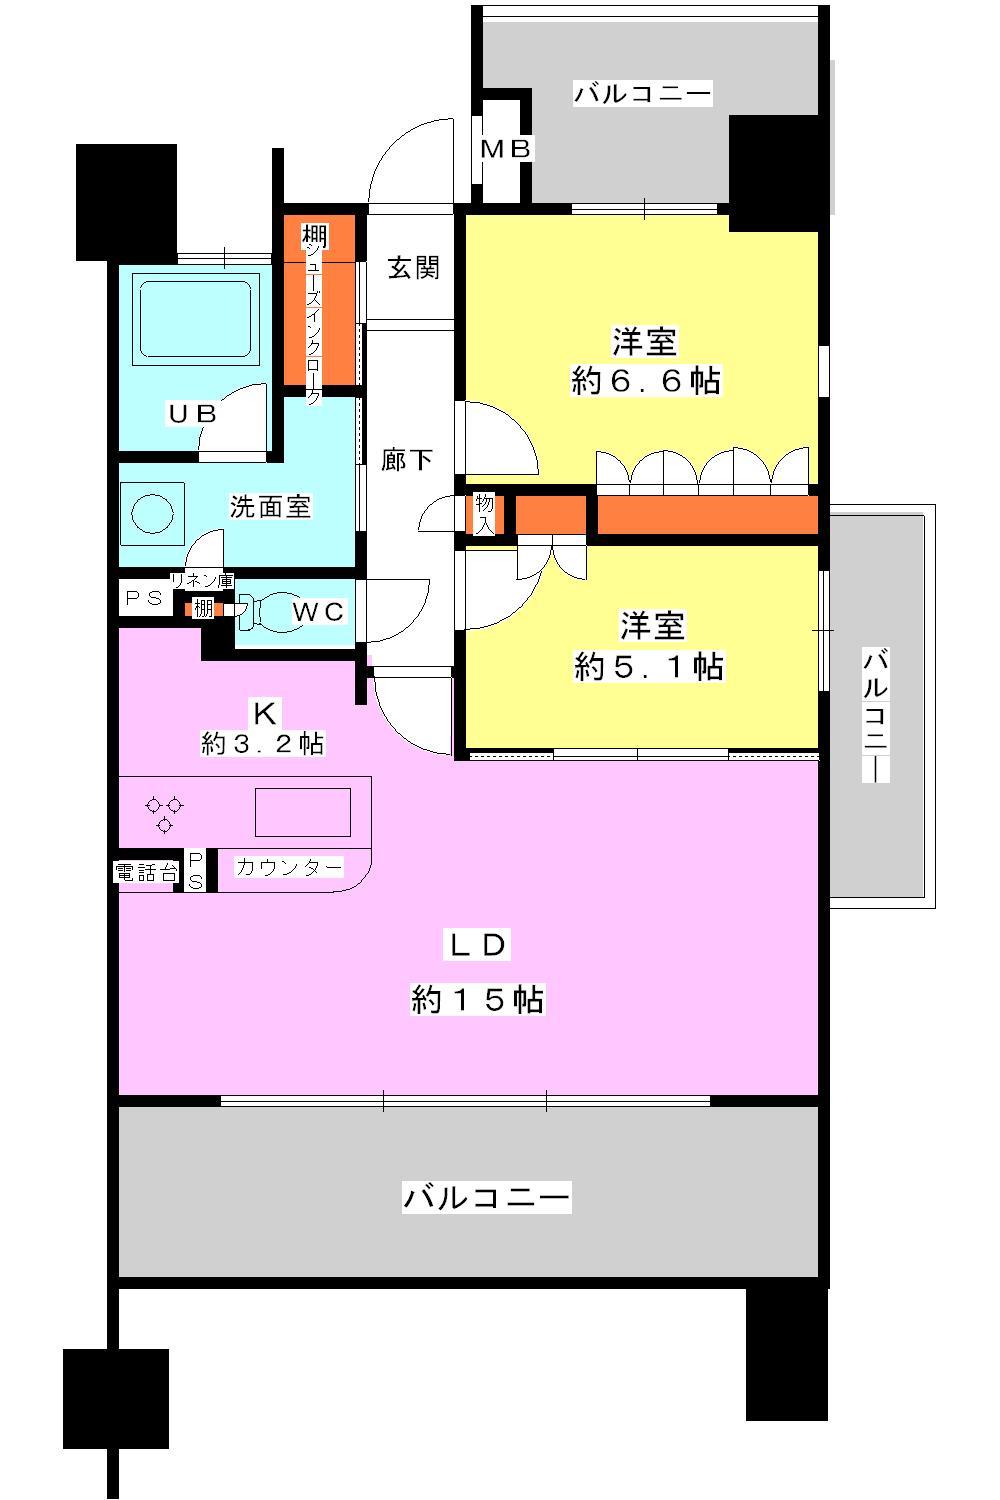 Floor plan. 2LDK, Price 19,800,000 yen, Footprint 63 sq m , Balcony area 23.74 sq m